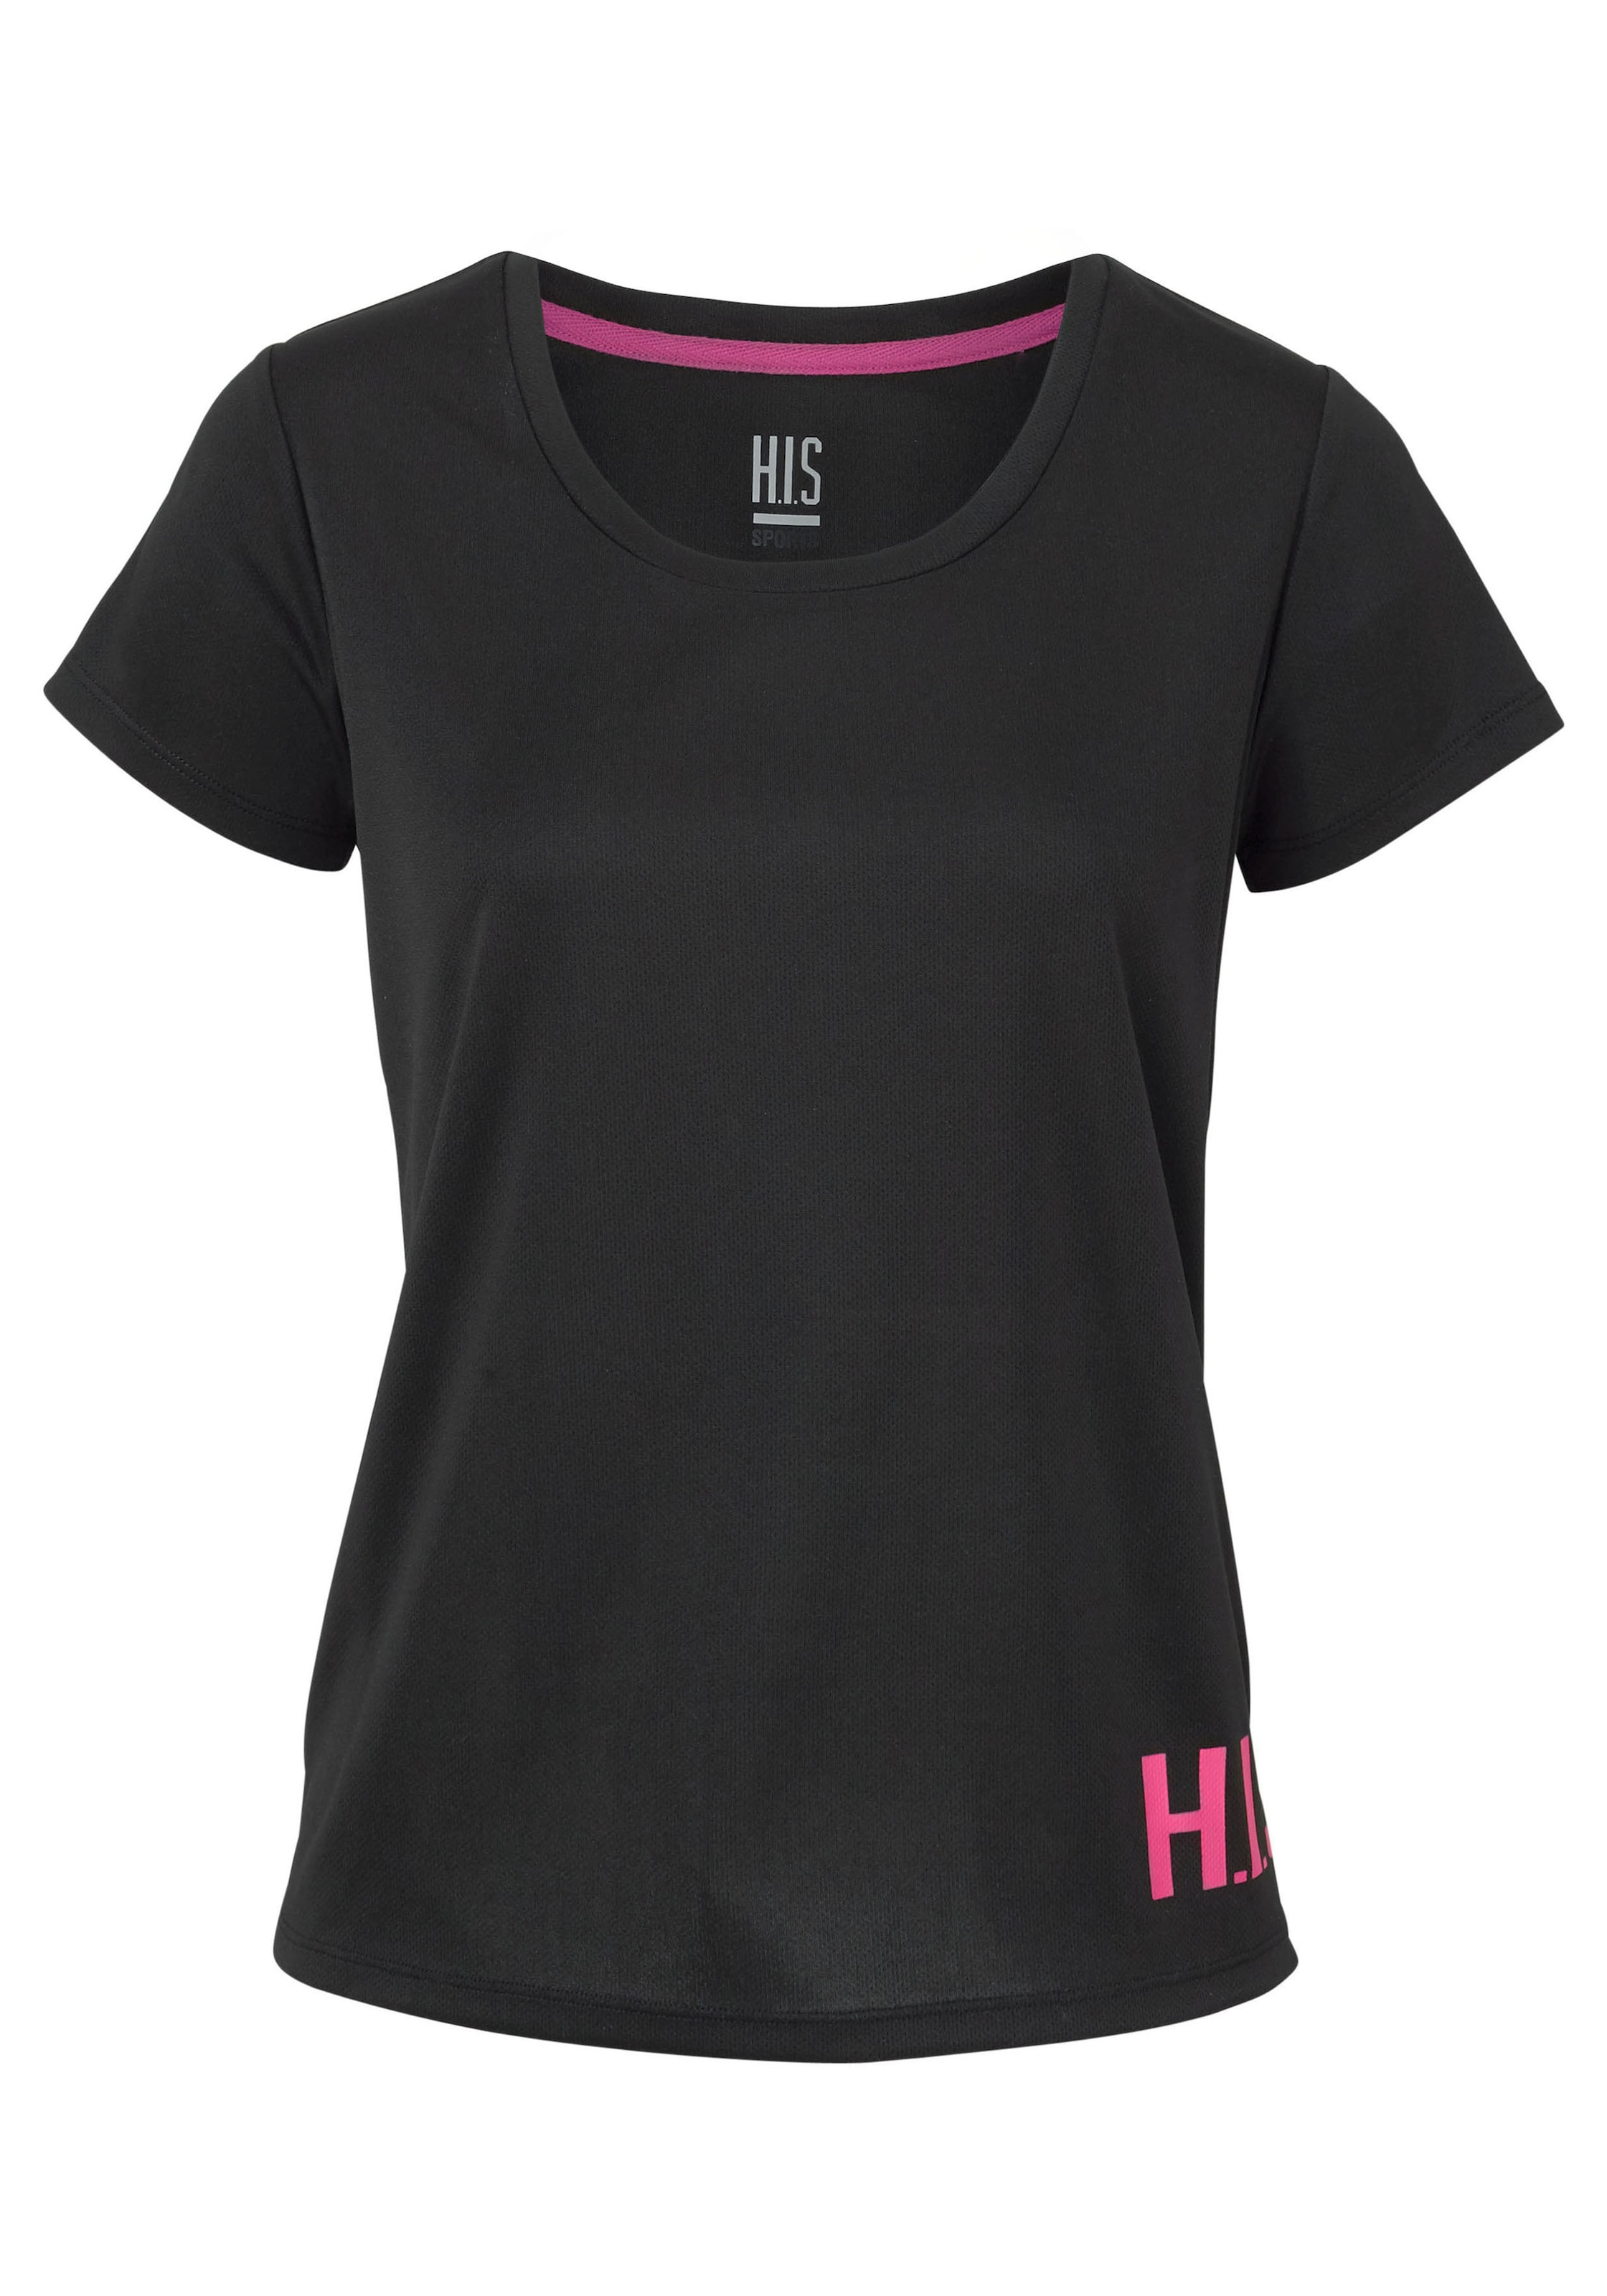 Frauen Shirts & Tops H.I.S Shirt in Lila, Schwarz - JO31992